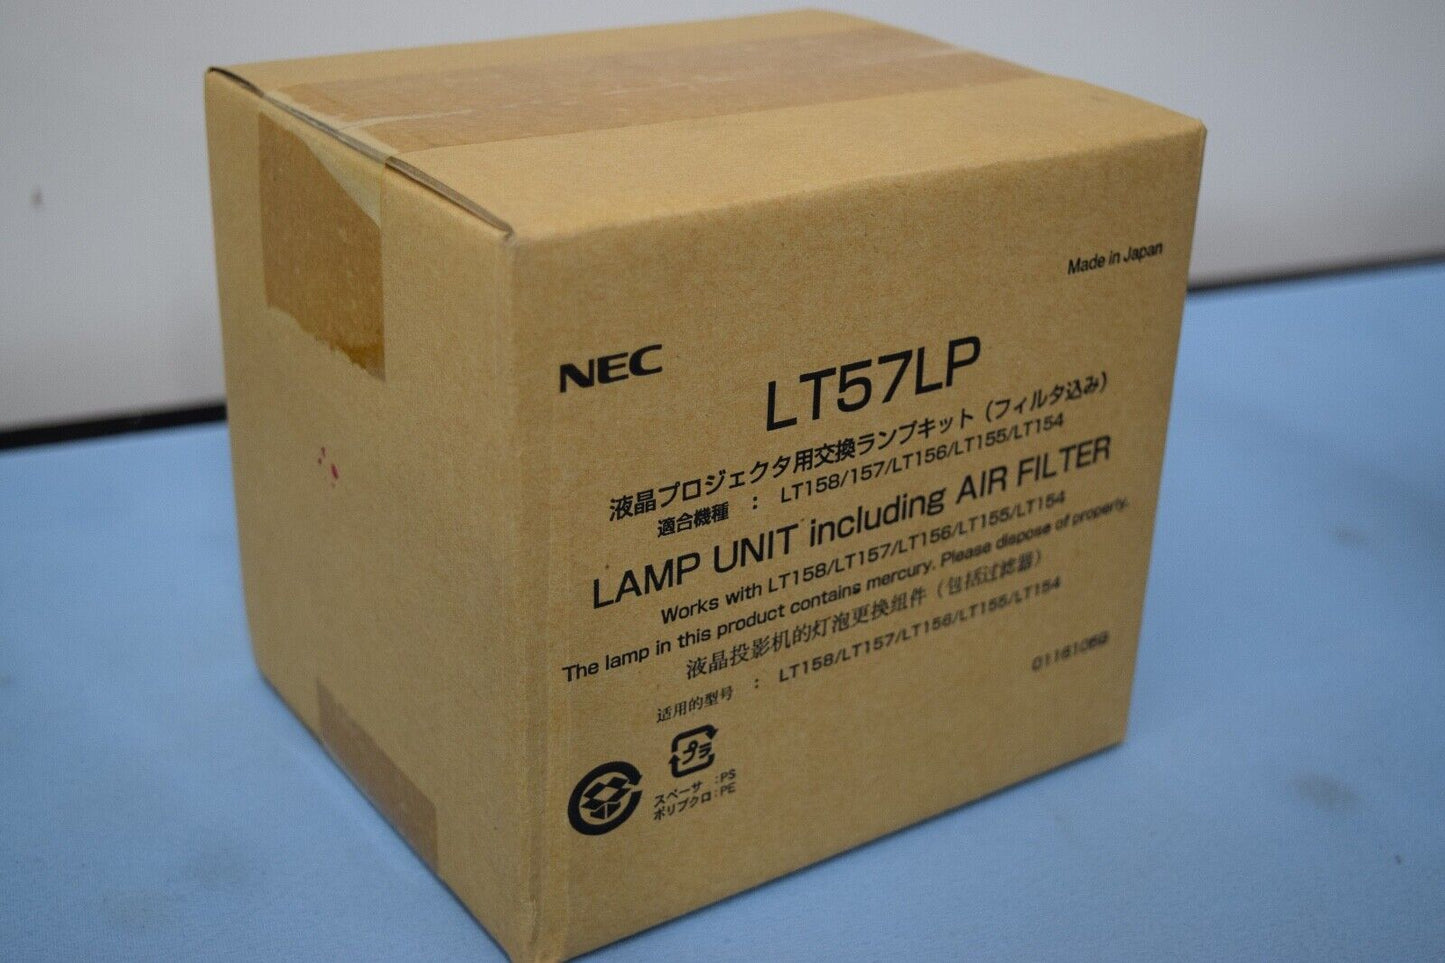 NEC  LT57LP Lamp Unit Including Air Filter   ORIGINAL NEC